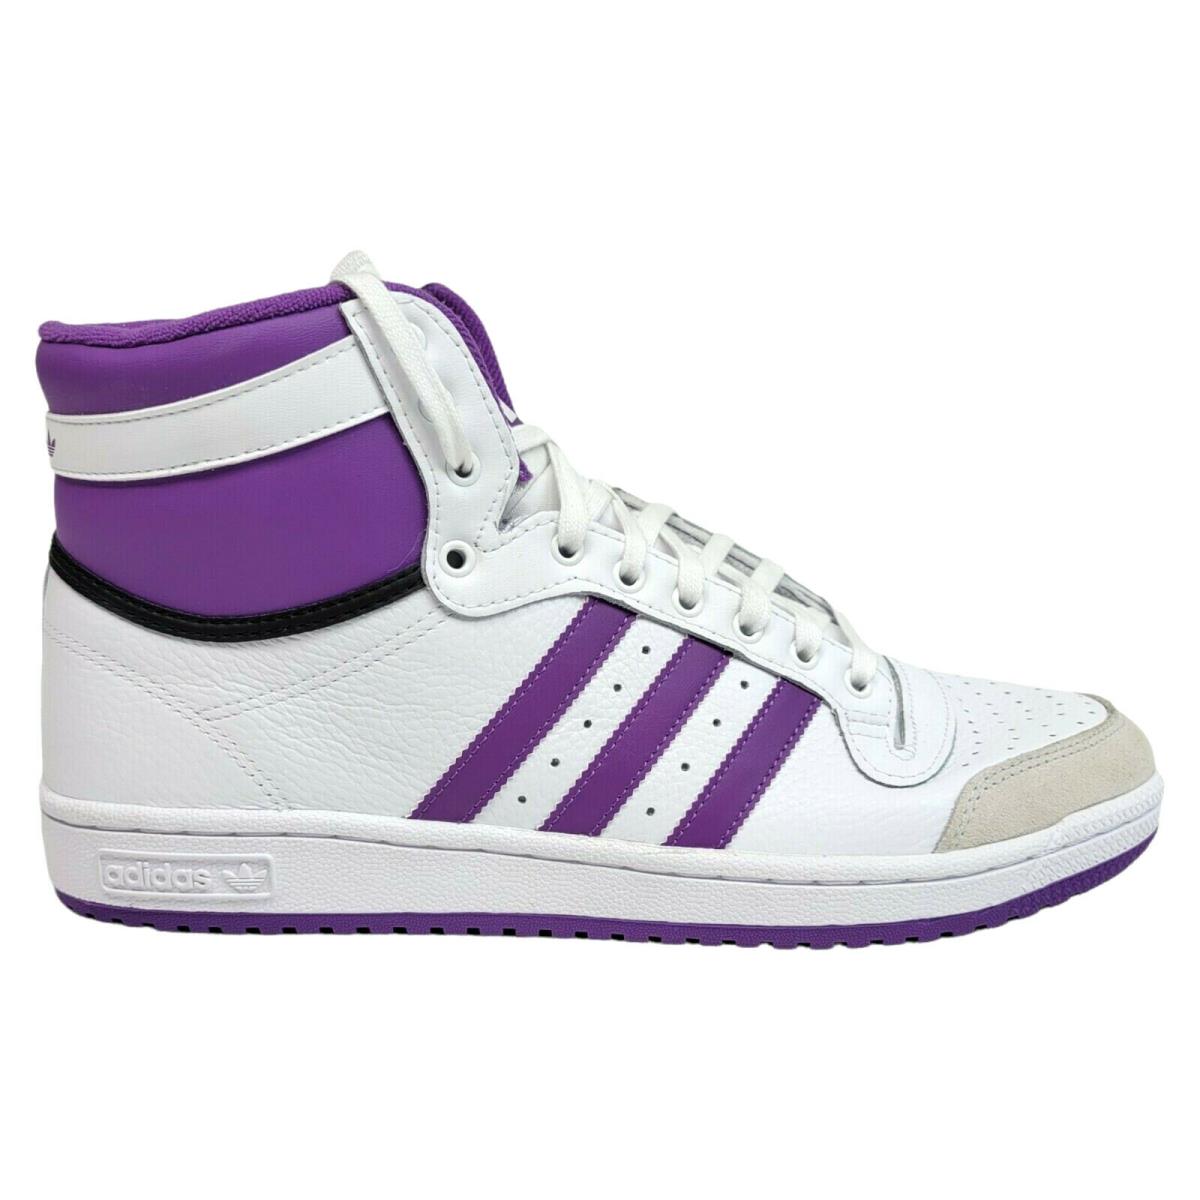 Adidas Originals Mens 12 13 Top Ten White Purple High Top Shoes Sneakers S24135